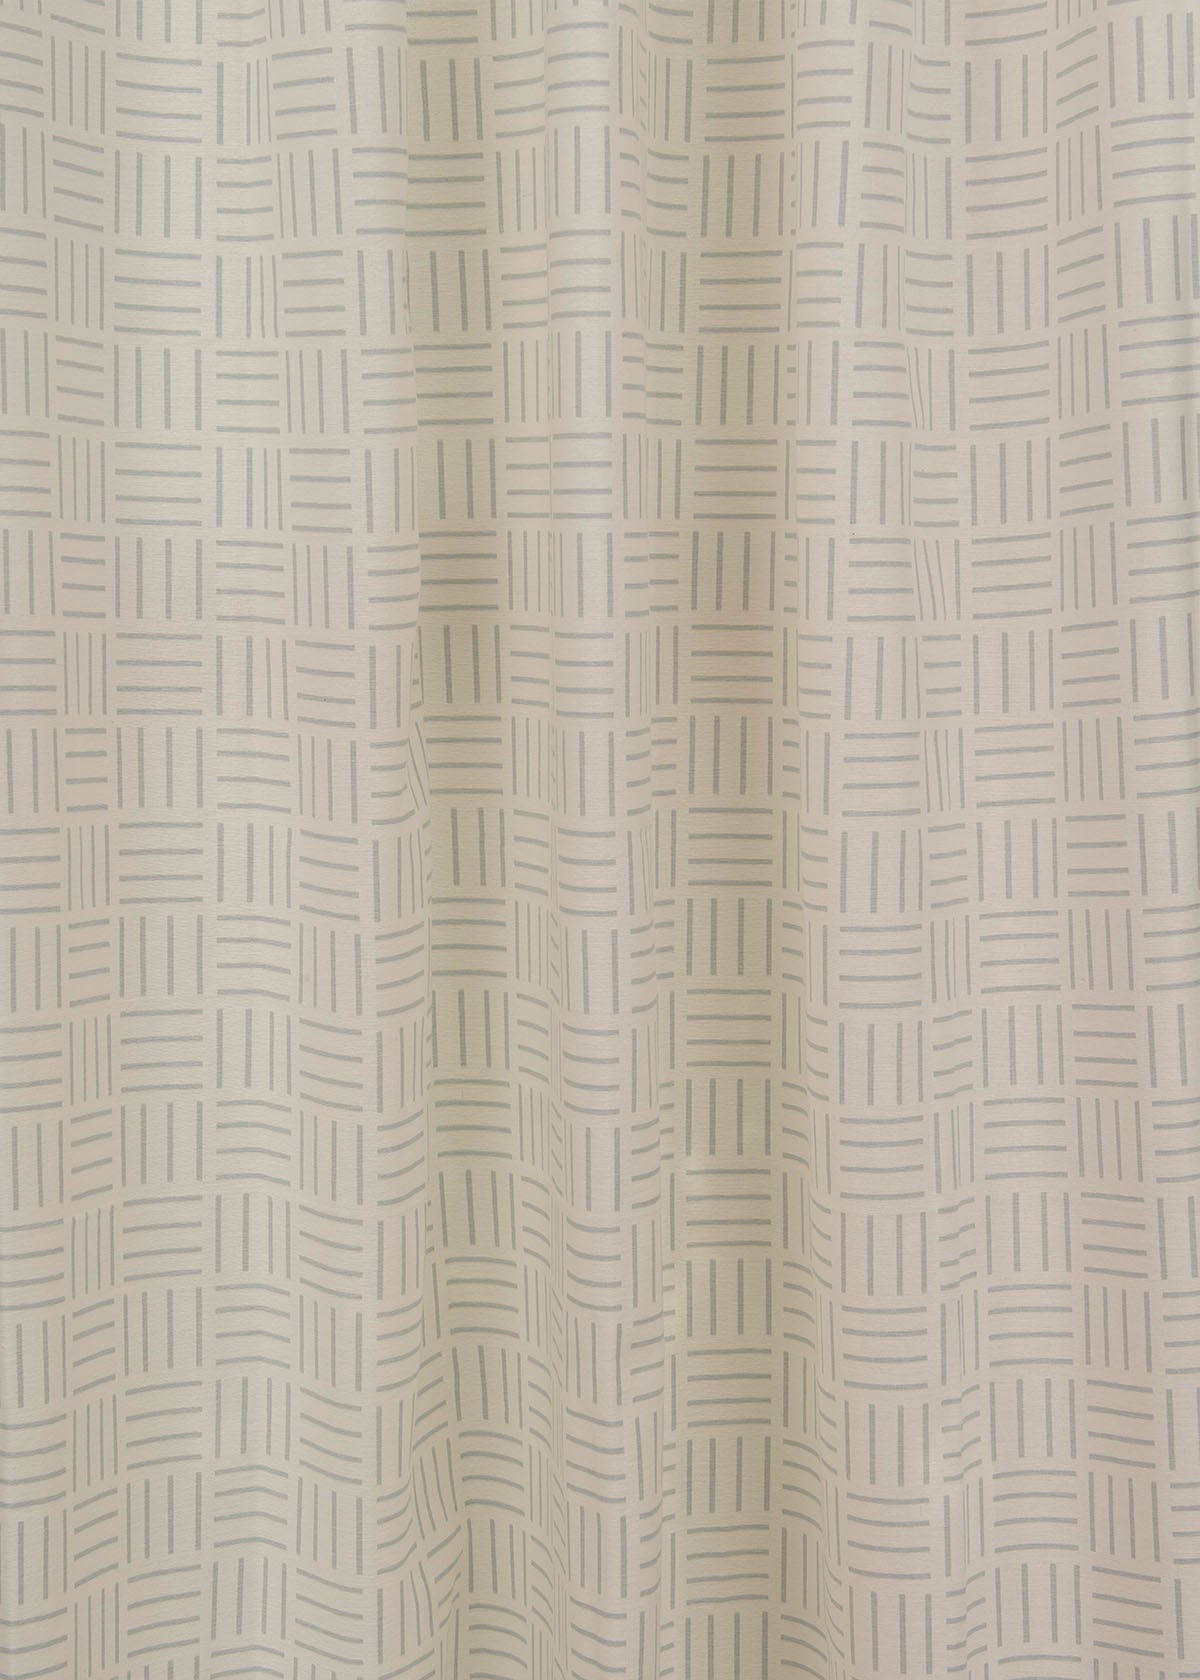 Hashlines 100% Customizable Cotton geometric curtain for living room - Room darkening - Grey